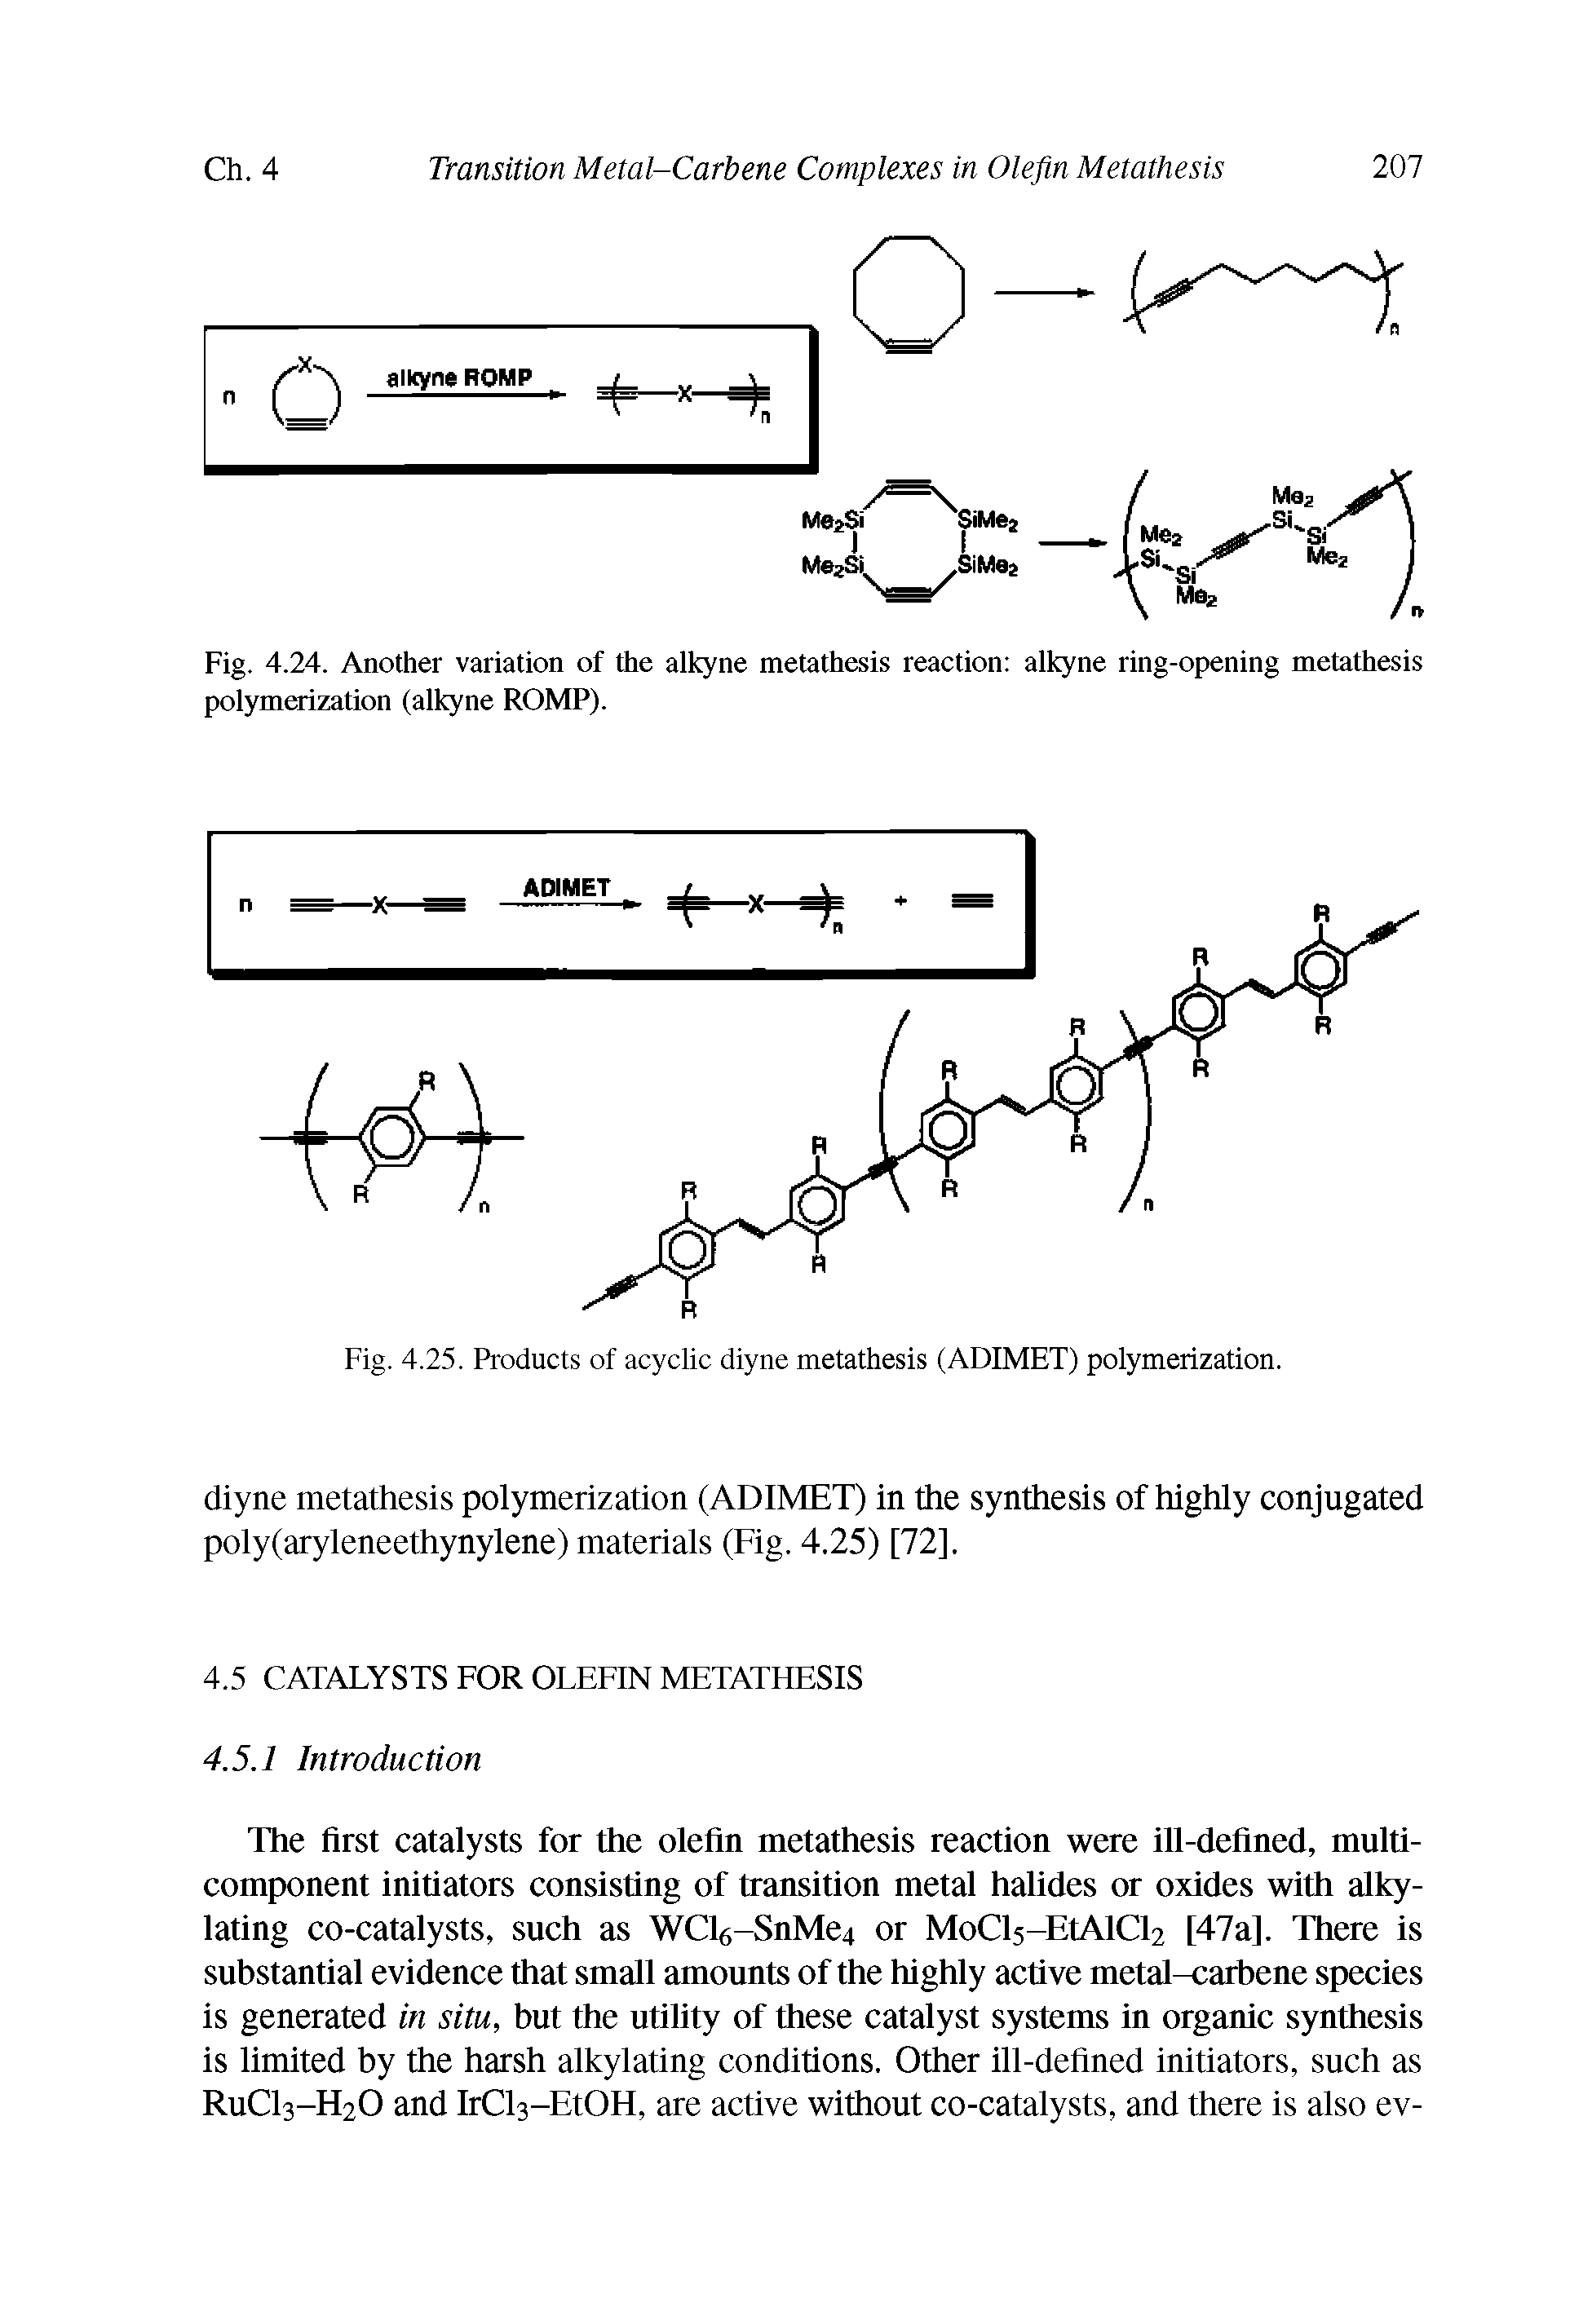 Fig. 4.24. Another variation of the alkyne metathesis reaction alkyne ring-opening metathesis polymerization (alkyne ROMP).